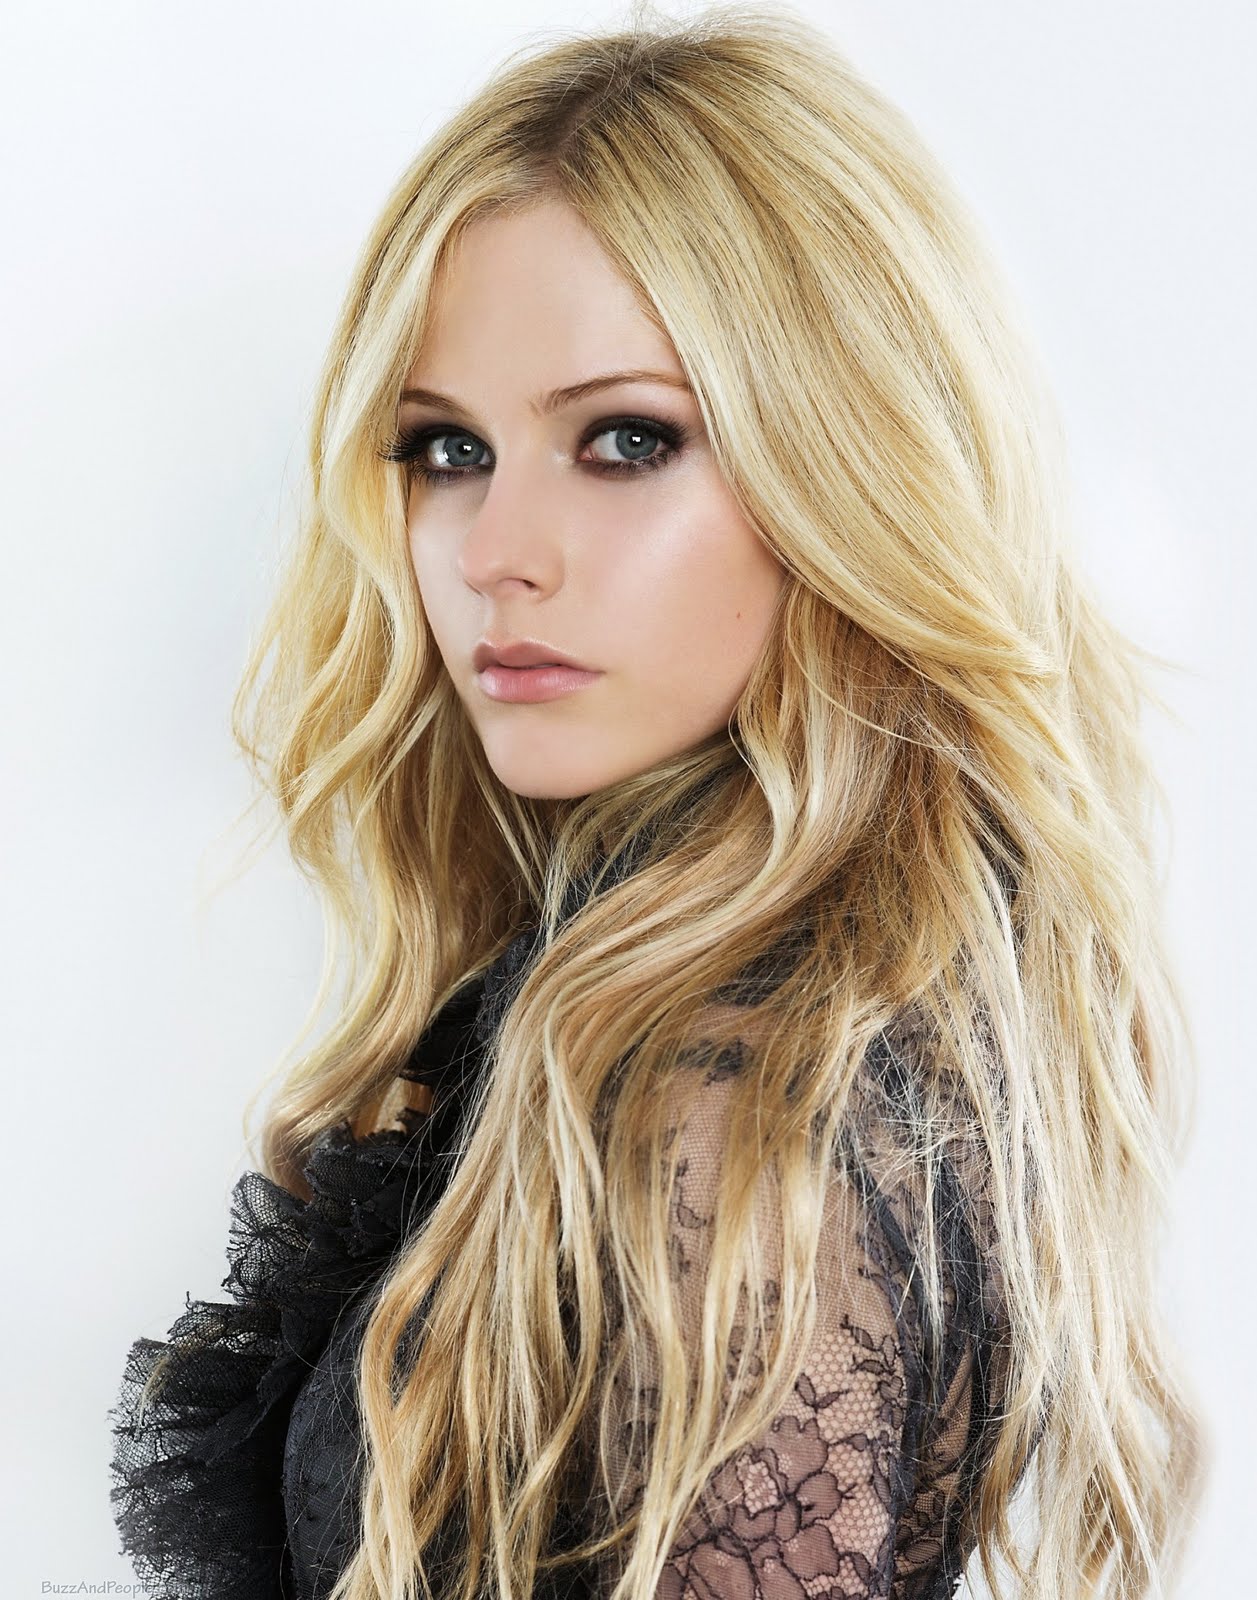 Wallpape Avril Lavigne Hot Sexy Cute Singer